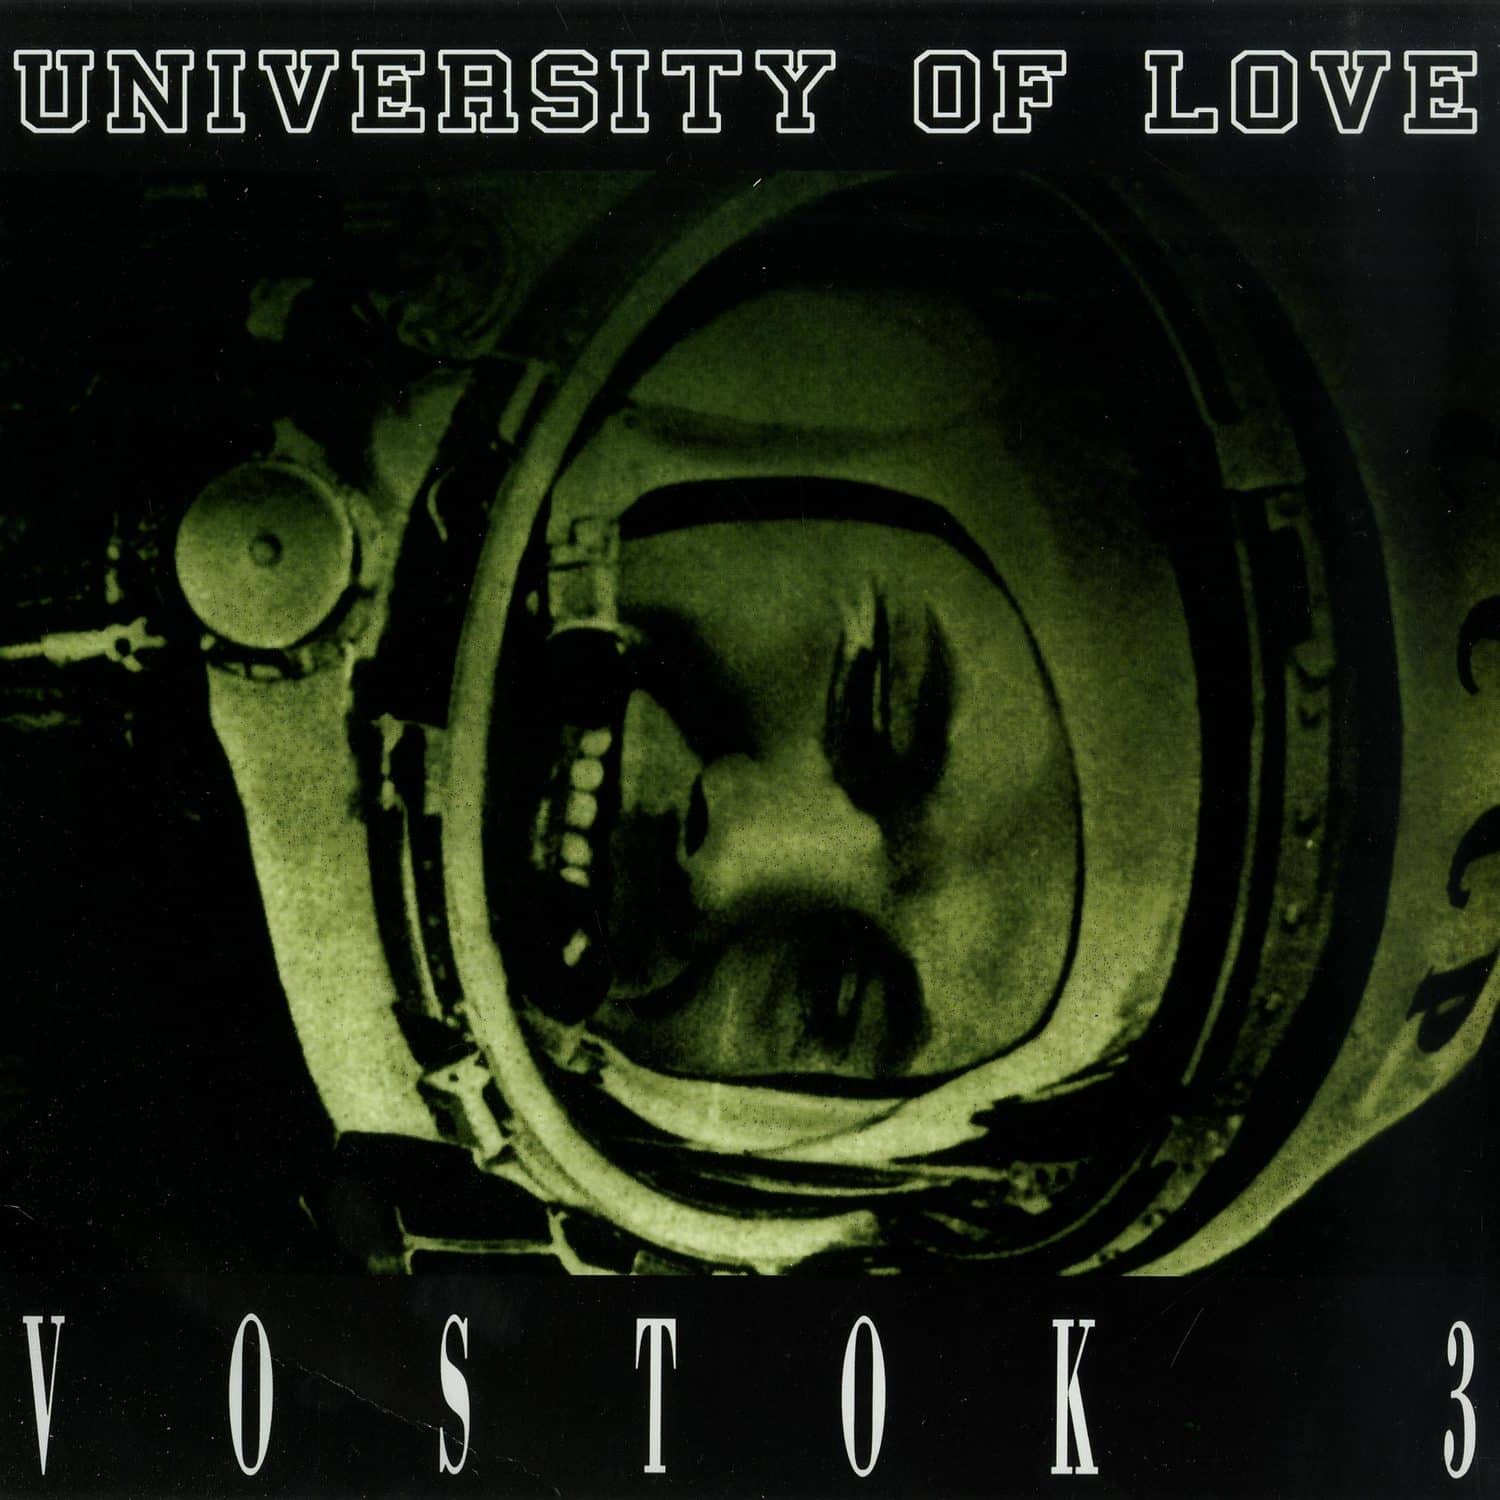 University Of Love ft. MBG - VOSTOK 3